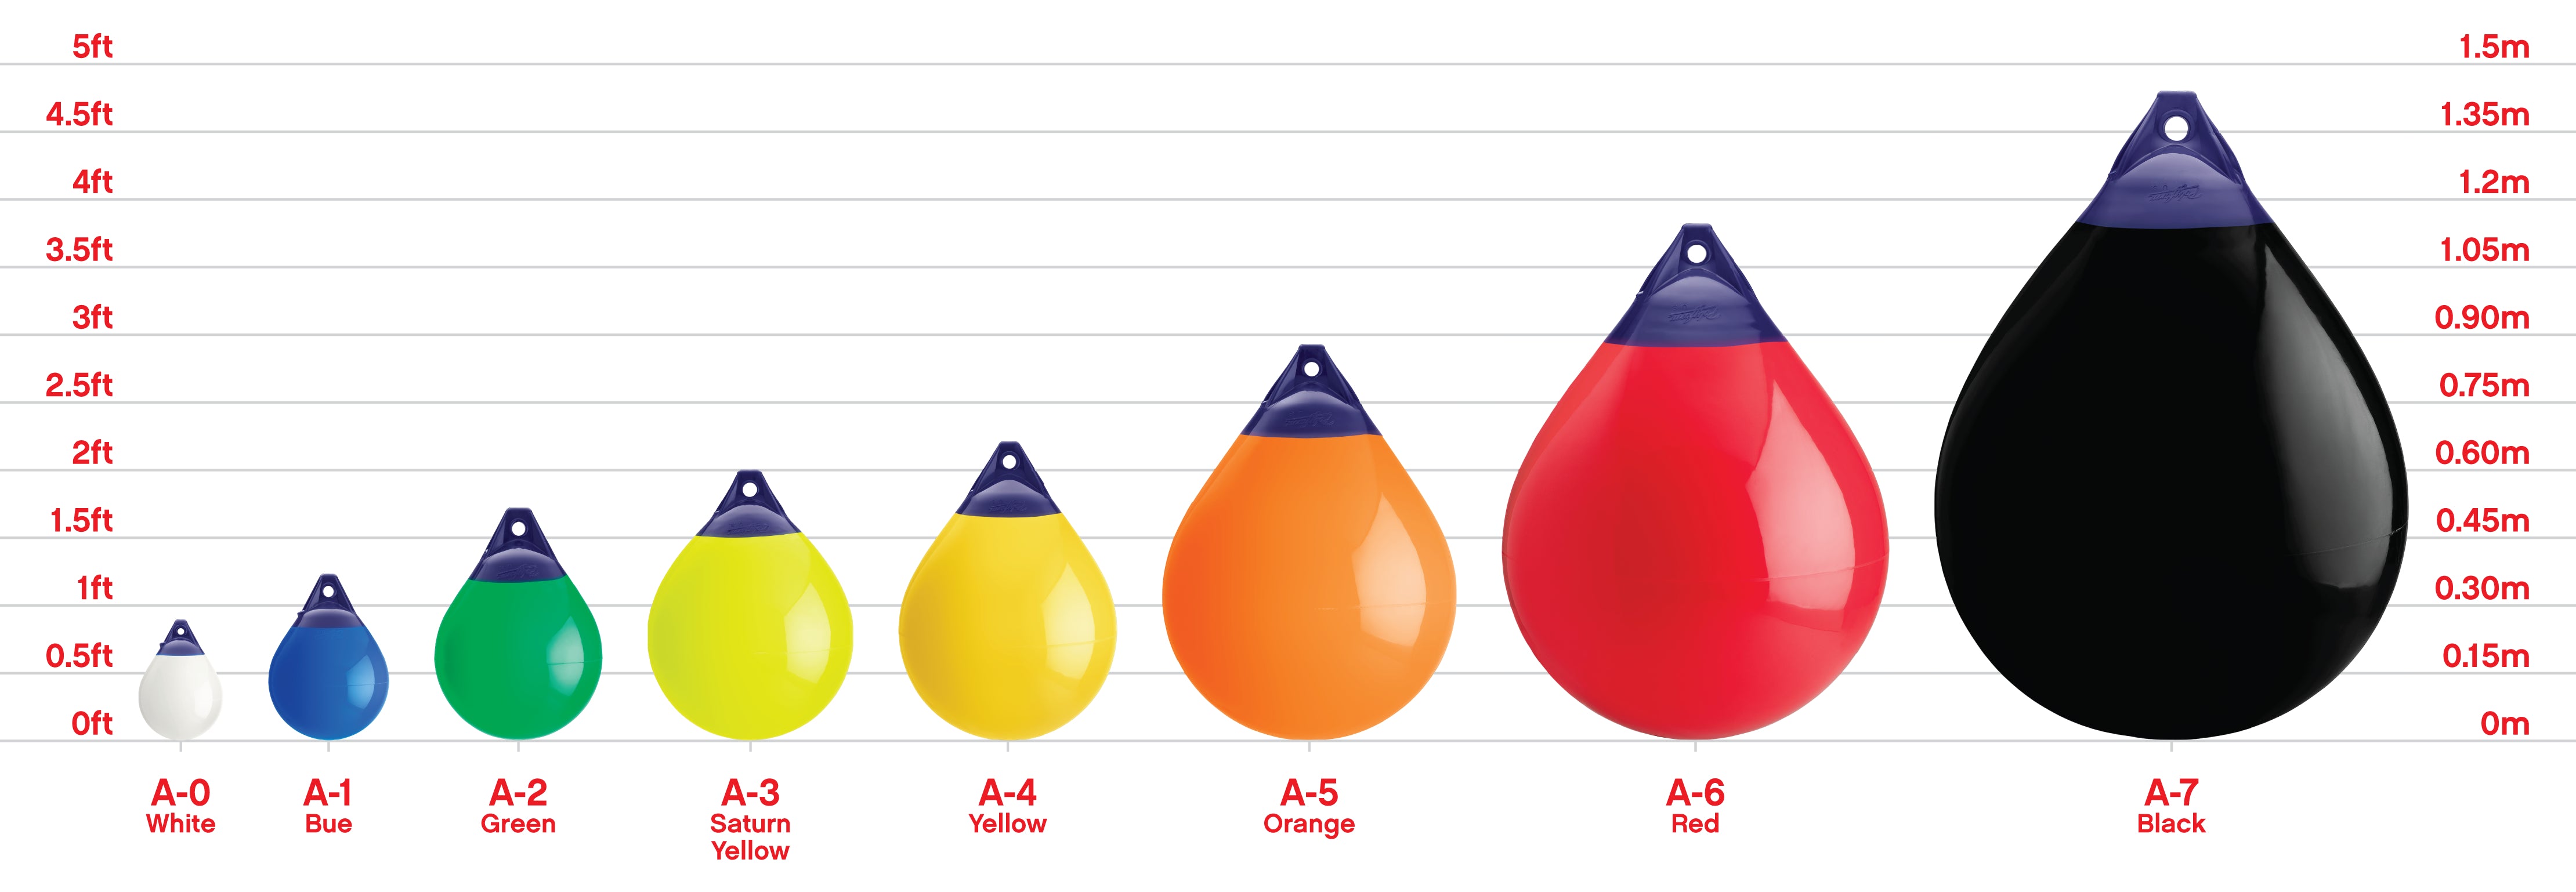 Buoys size chart, Polyform A Series